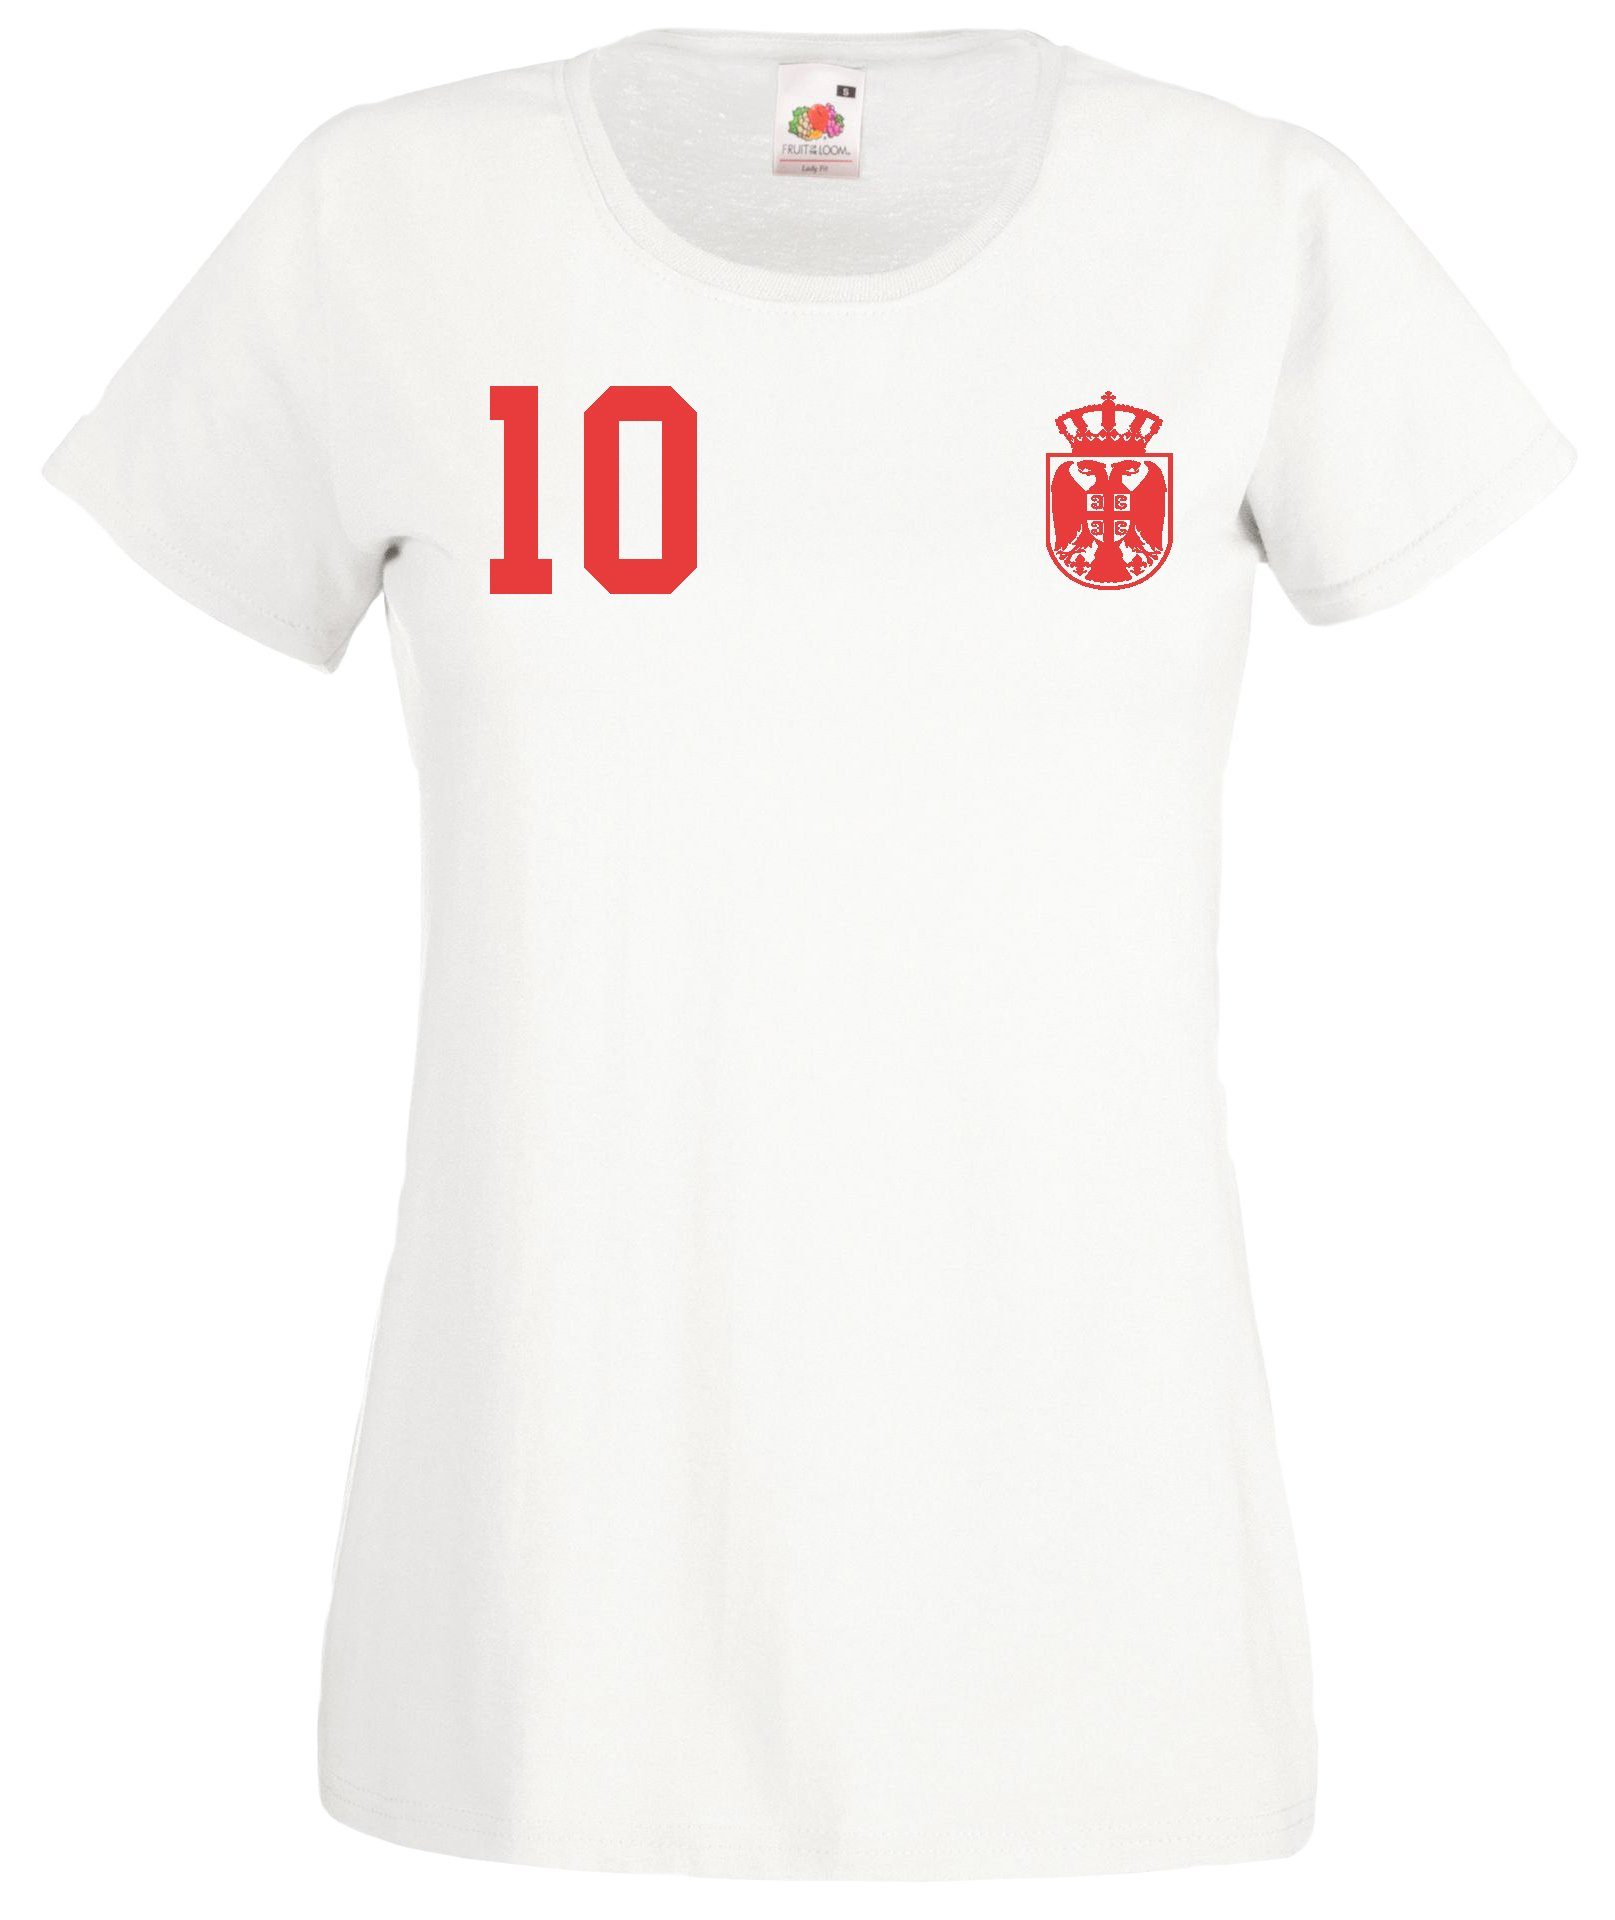 Youth Designz T-Shirt Serbien Damen T-Shirt im Fußball Trikot Look mit trendigem Motiv